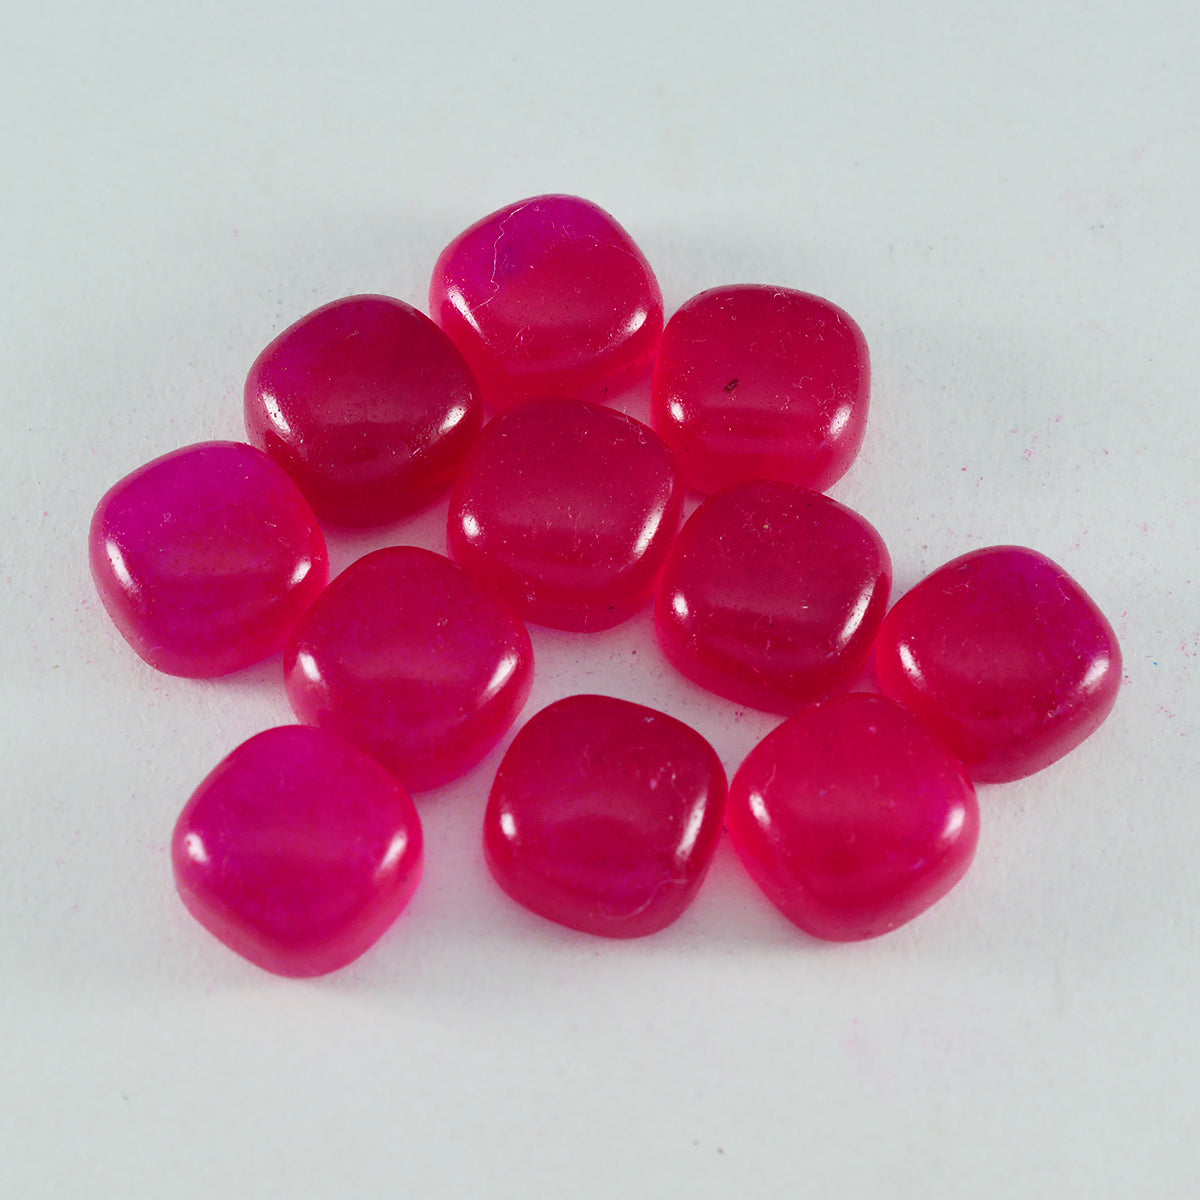 Riyogems 1PC rode jaspis cabochon 5x5 mm kussenvorm uitstekende kwaliteit edelsteen